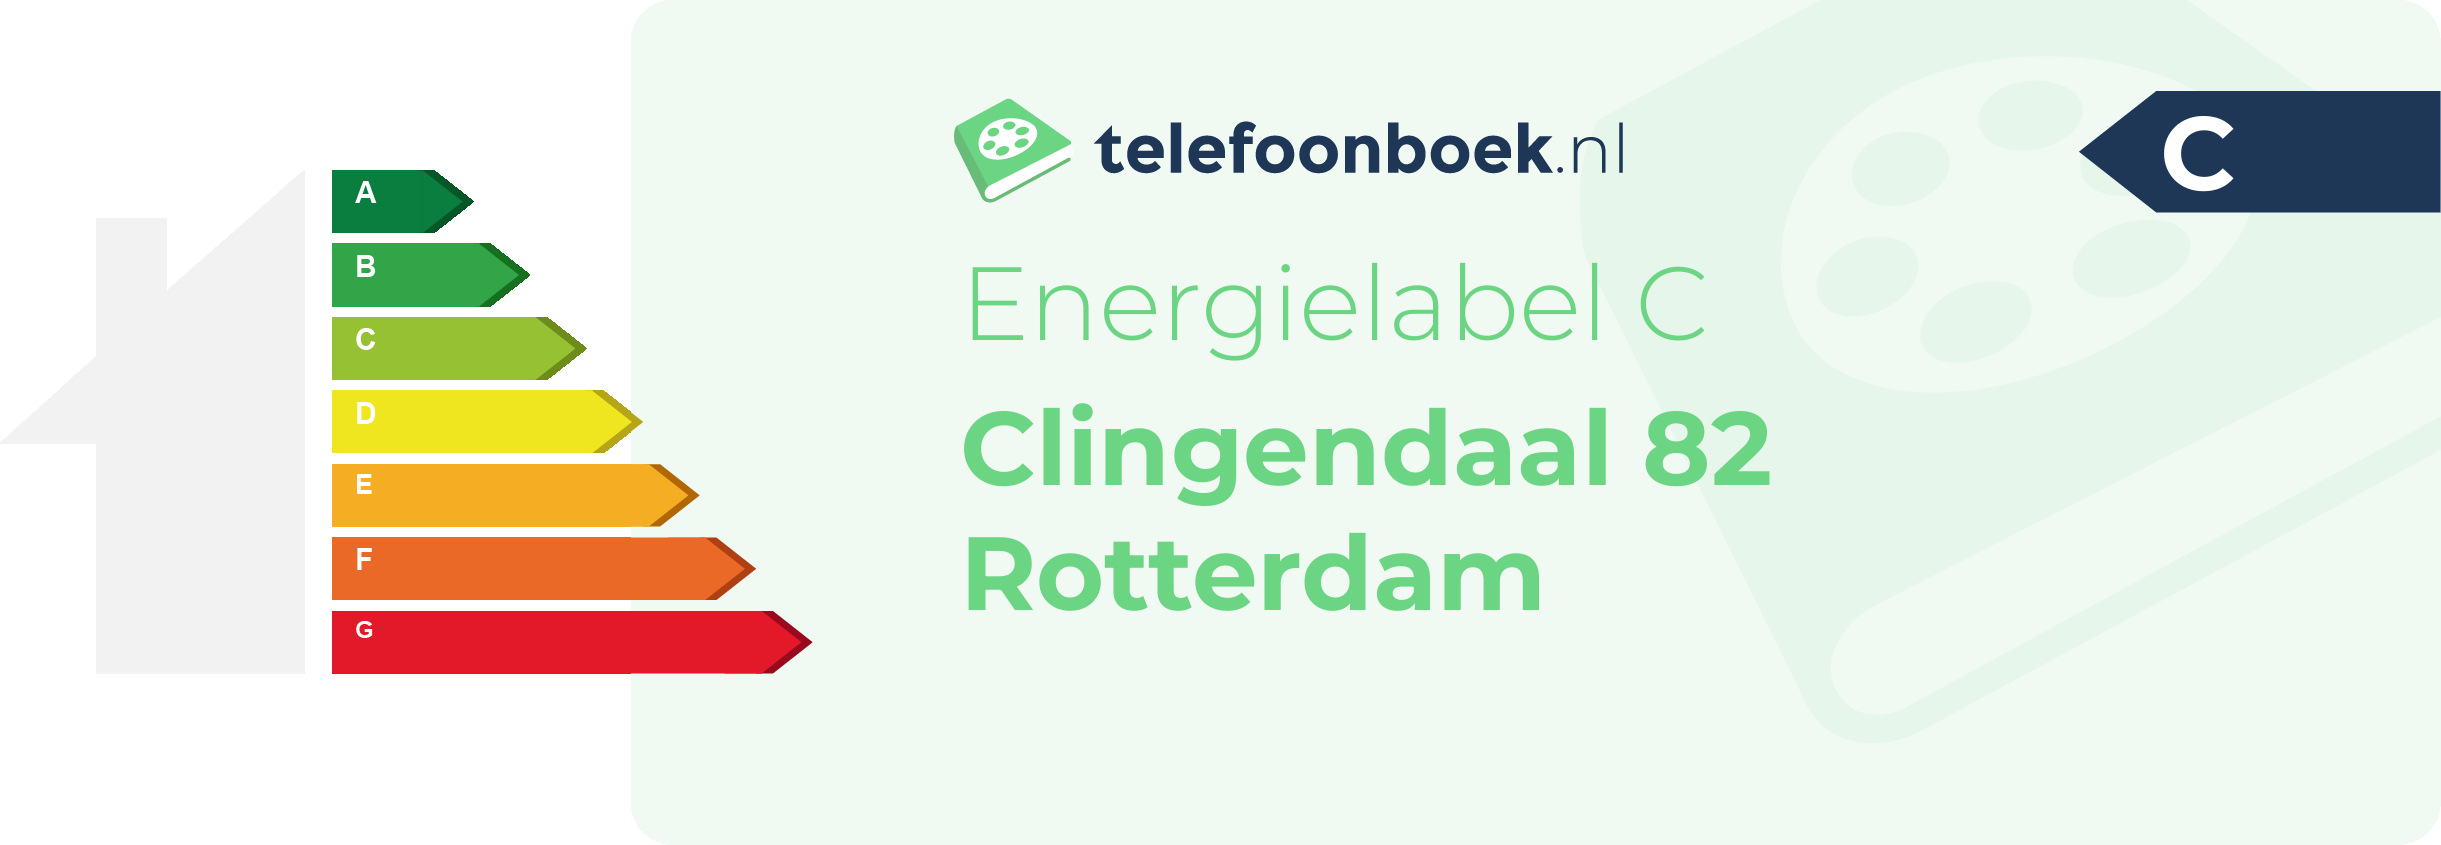 Energielabel Clingendaal 82 Rotterdam